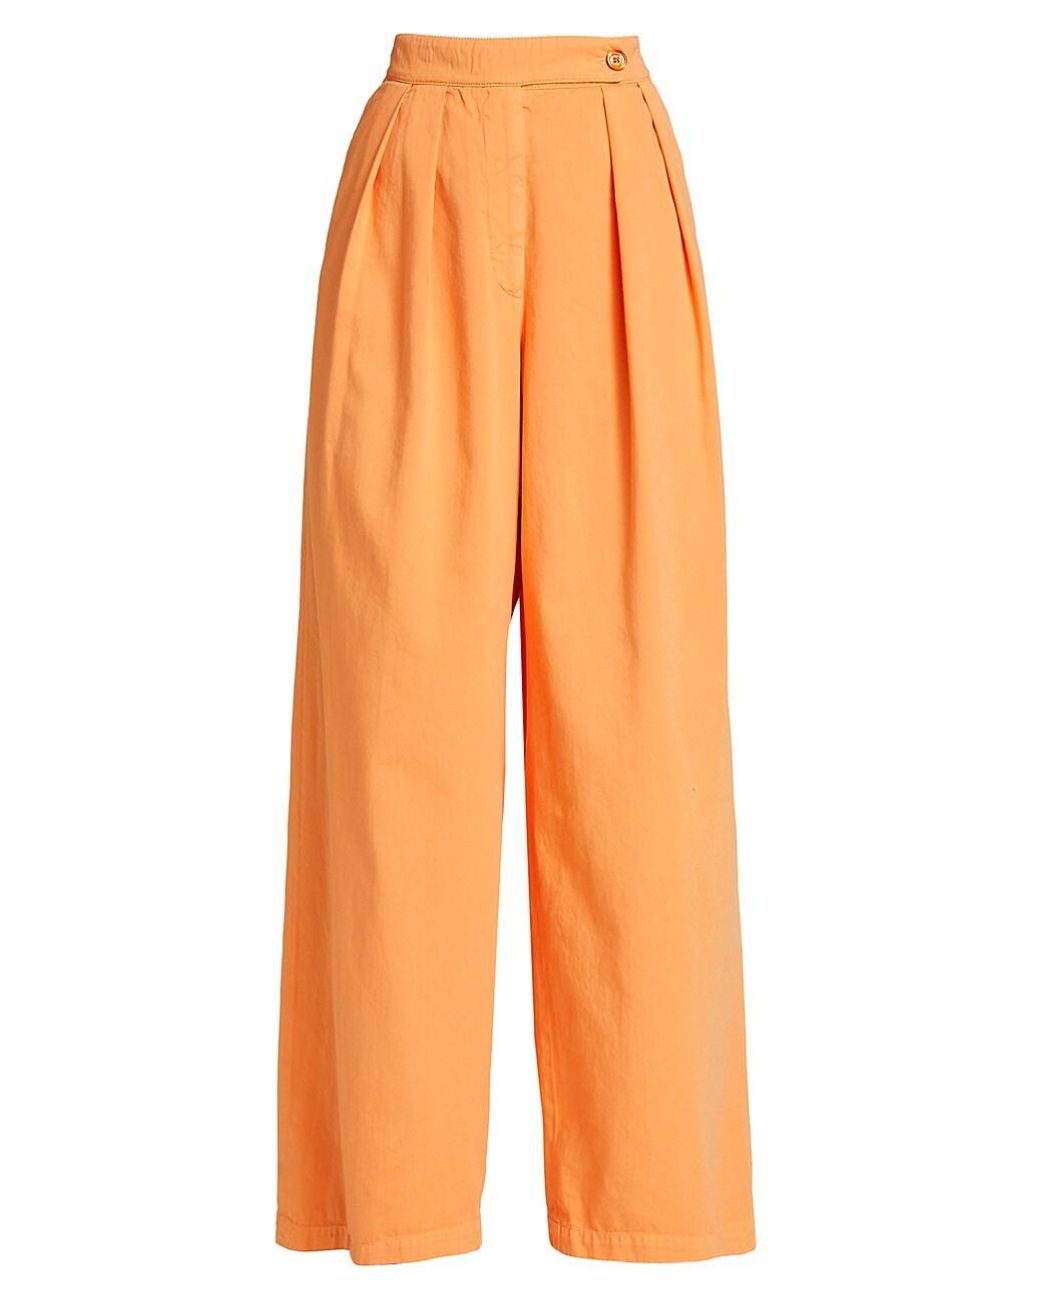 Dries Van Noten Pamplona Wide-leg Cotton Pants in Peach (Orange) | Lyst